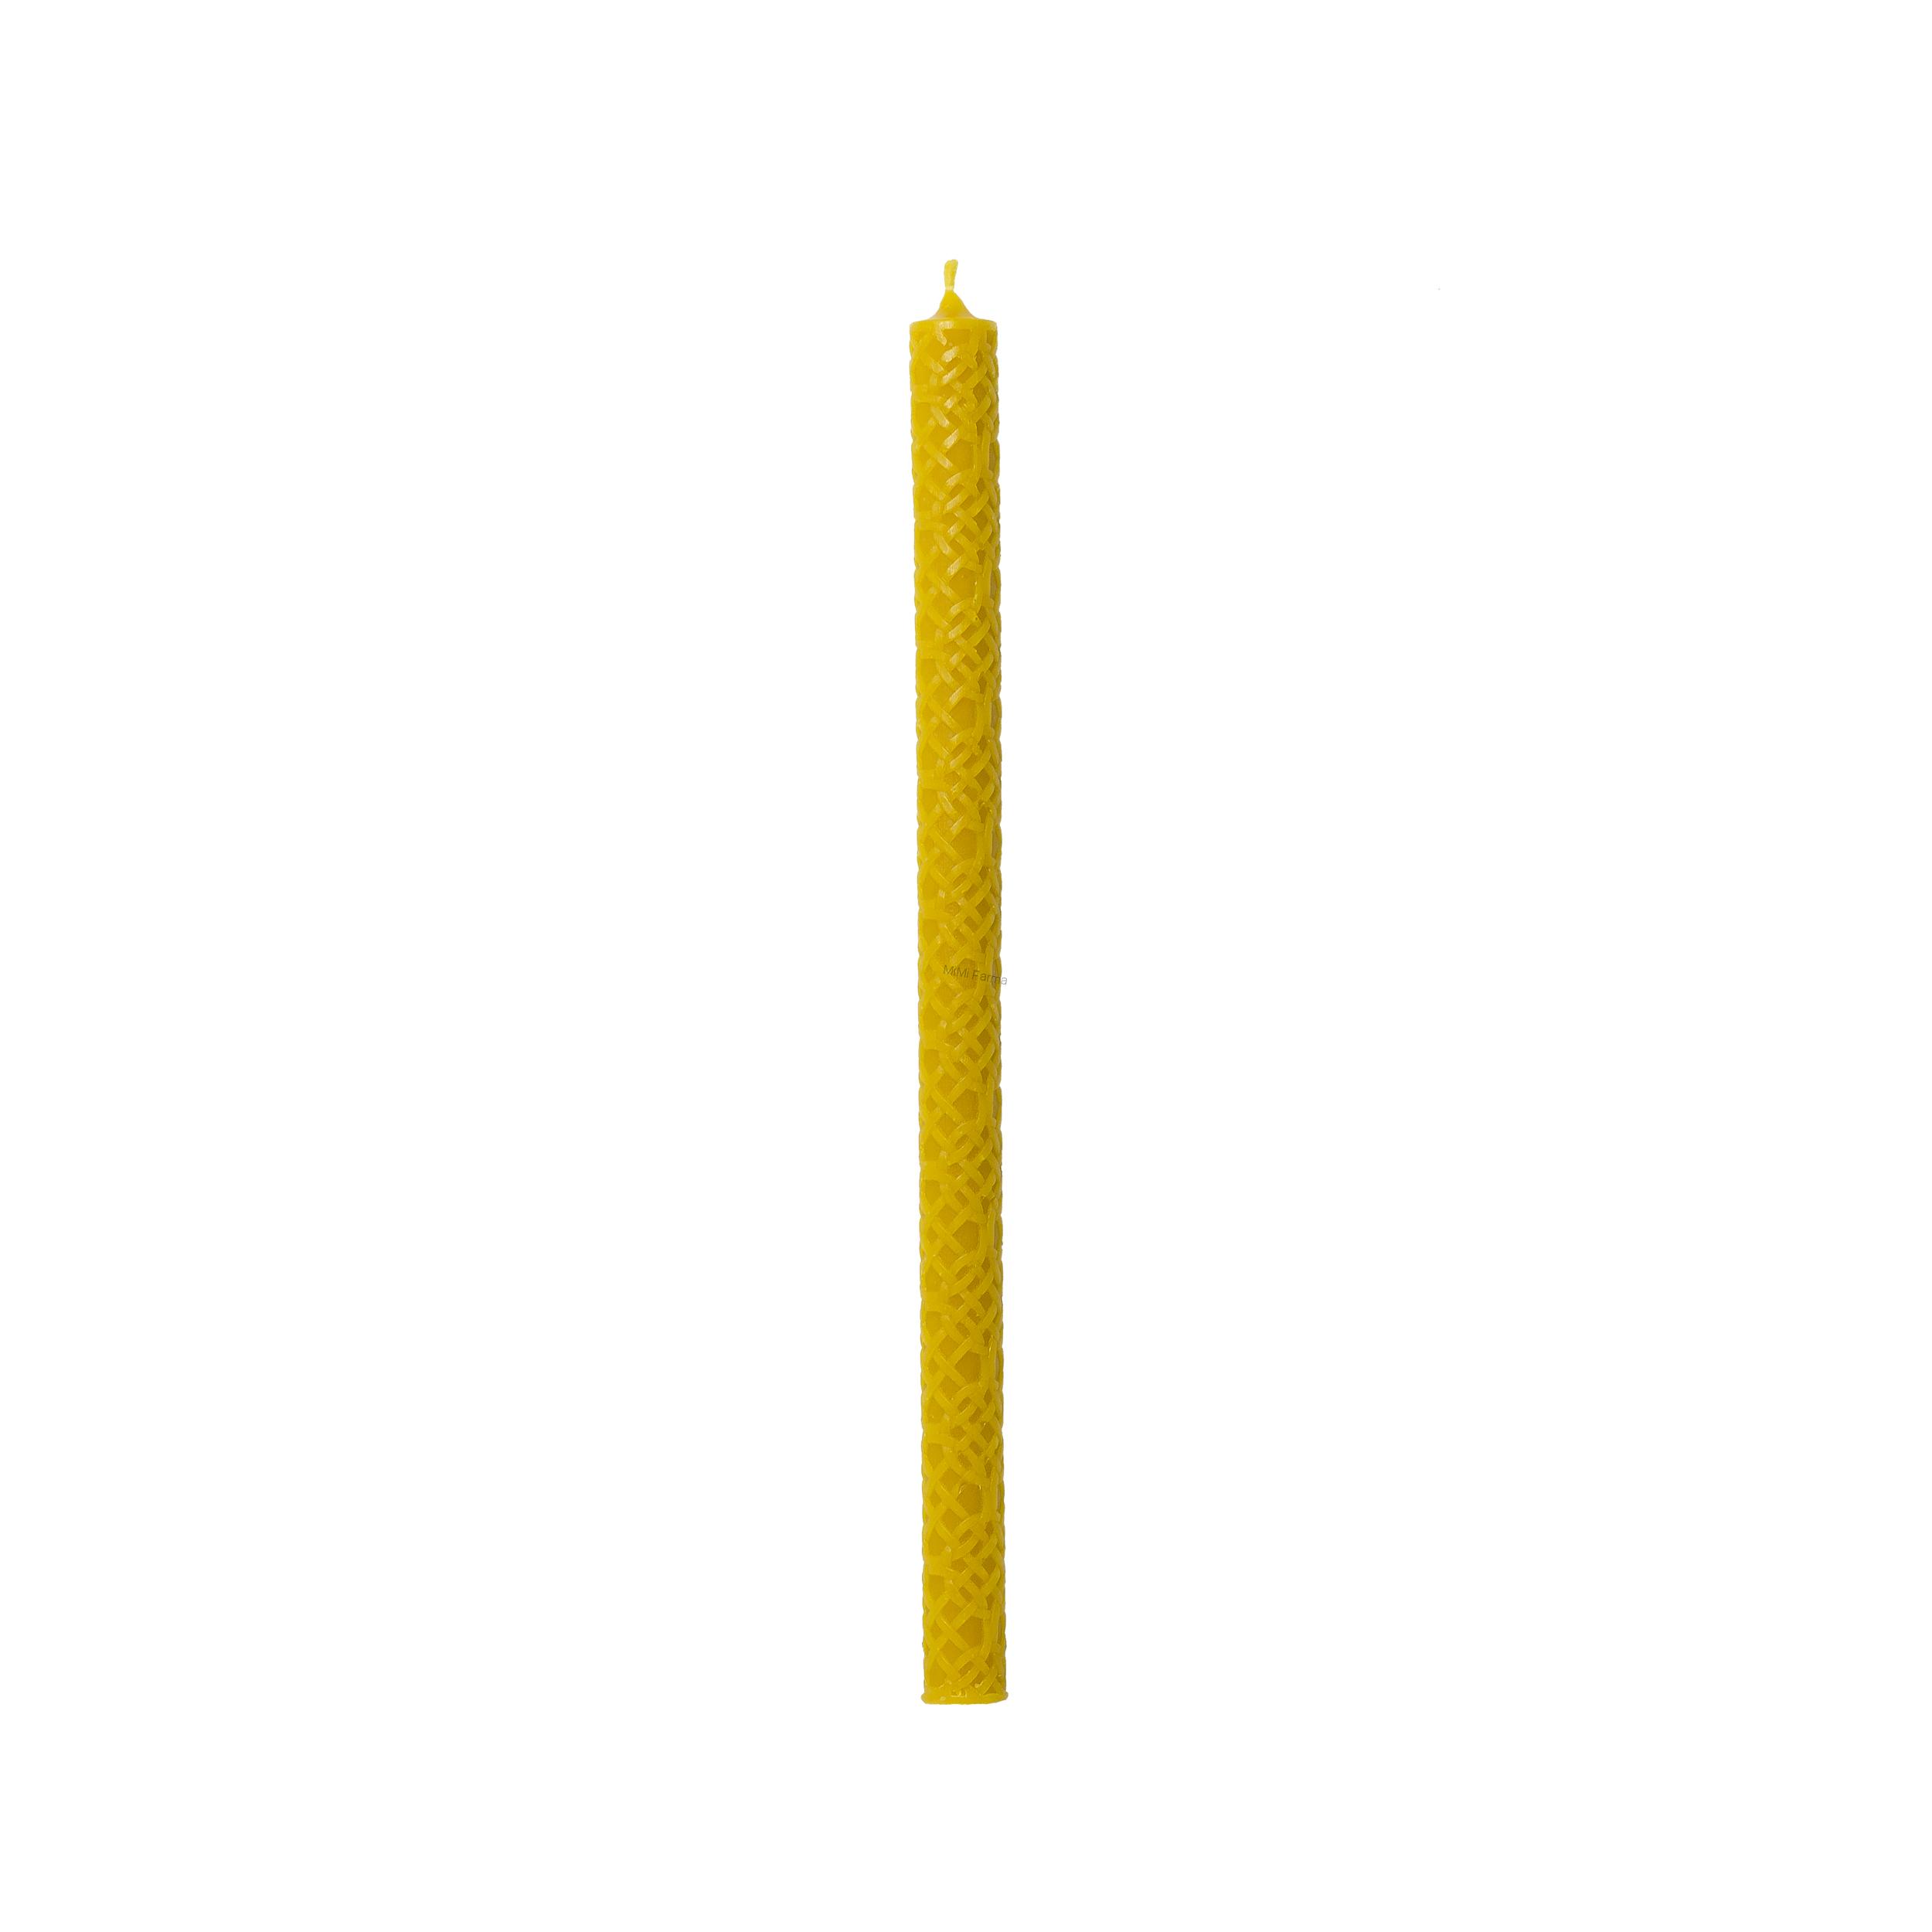 Stolová rovná zdobená 1 - 30cm - sviečka zo včelieho vosku